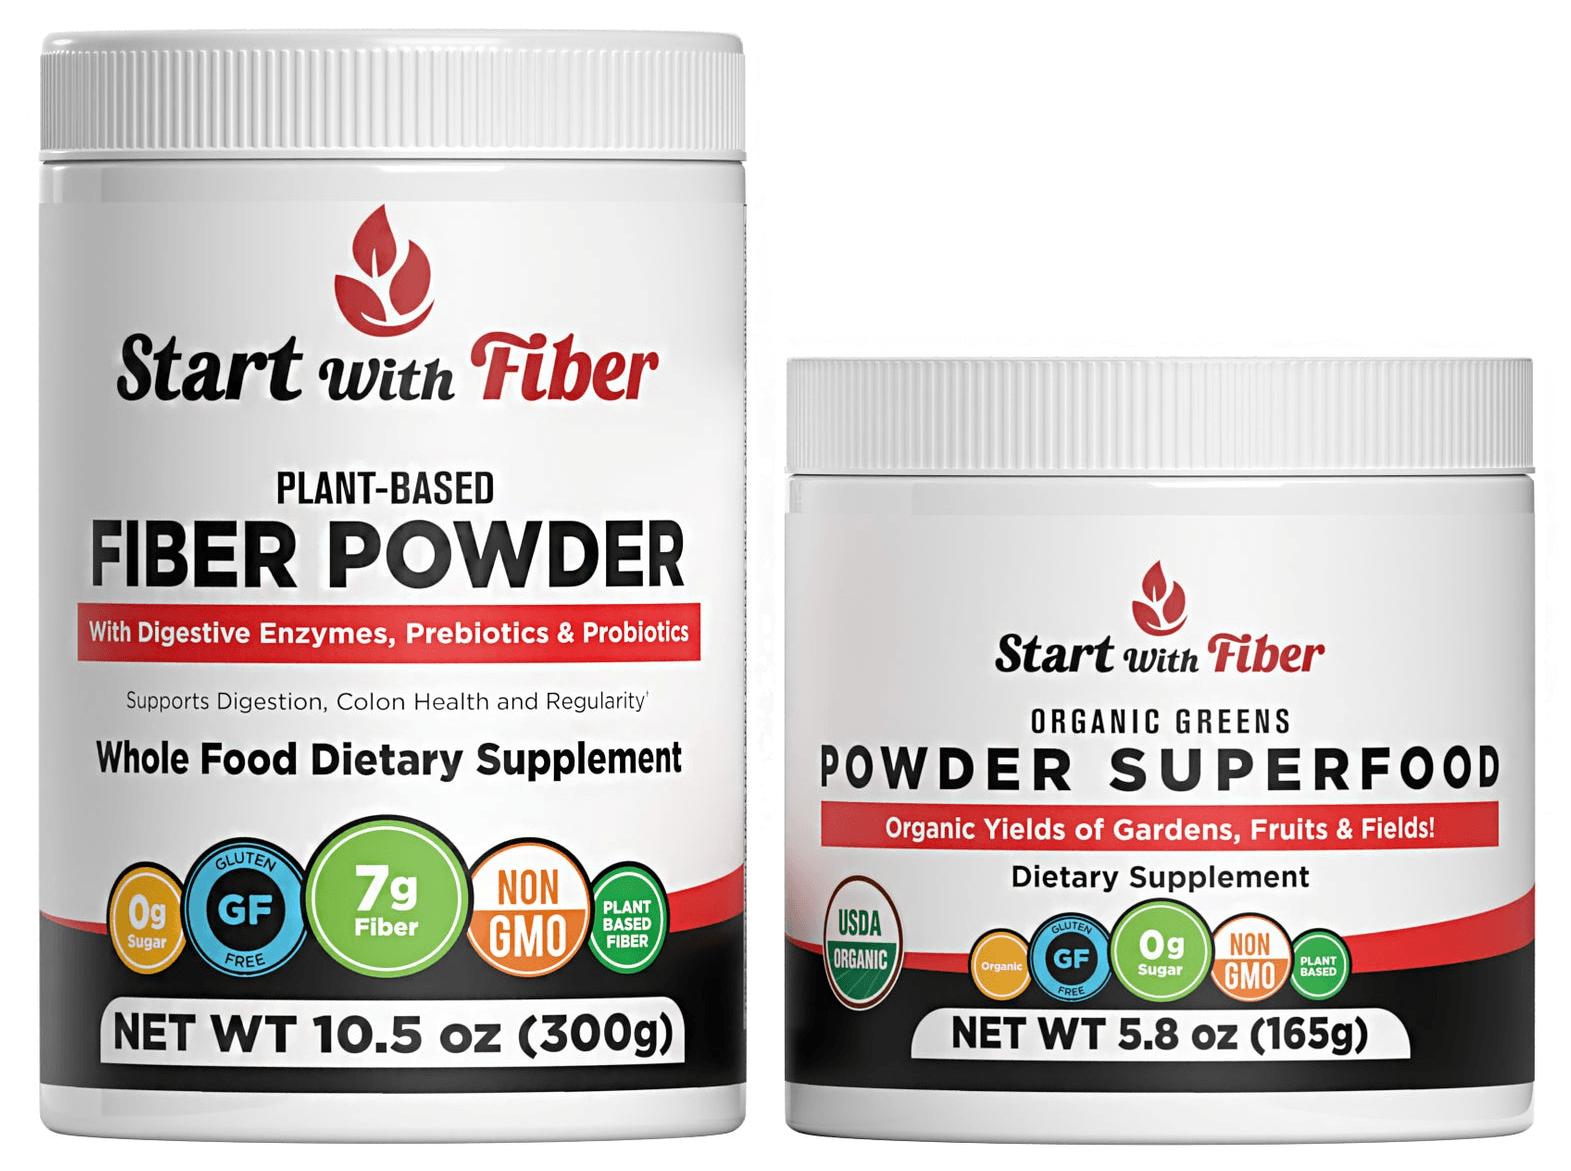 Organic Greens Powder Superfood and Plant-Based Fiber Powder Combo